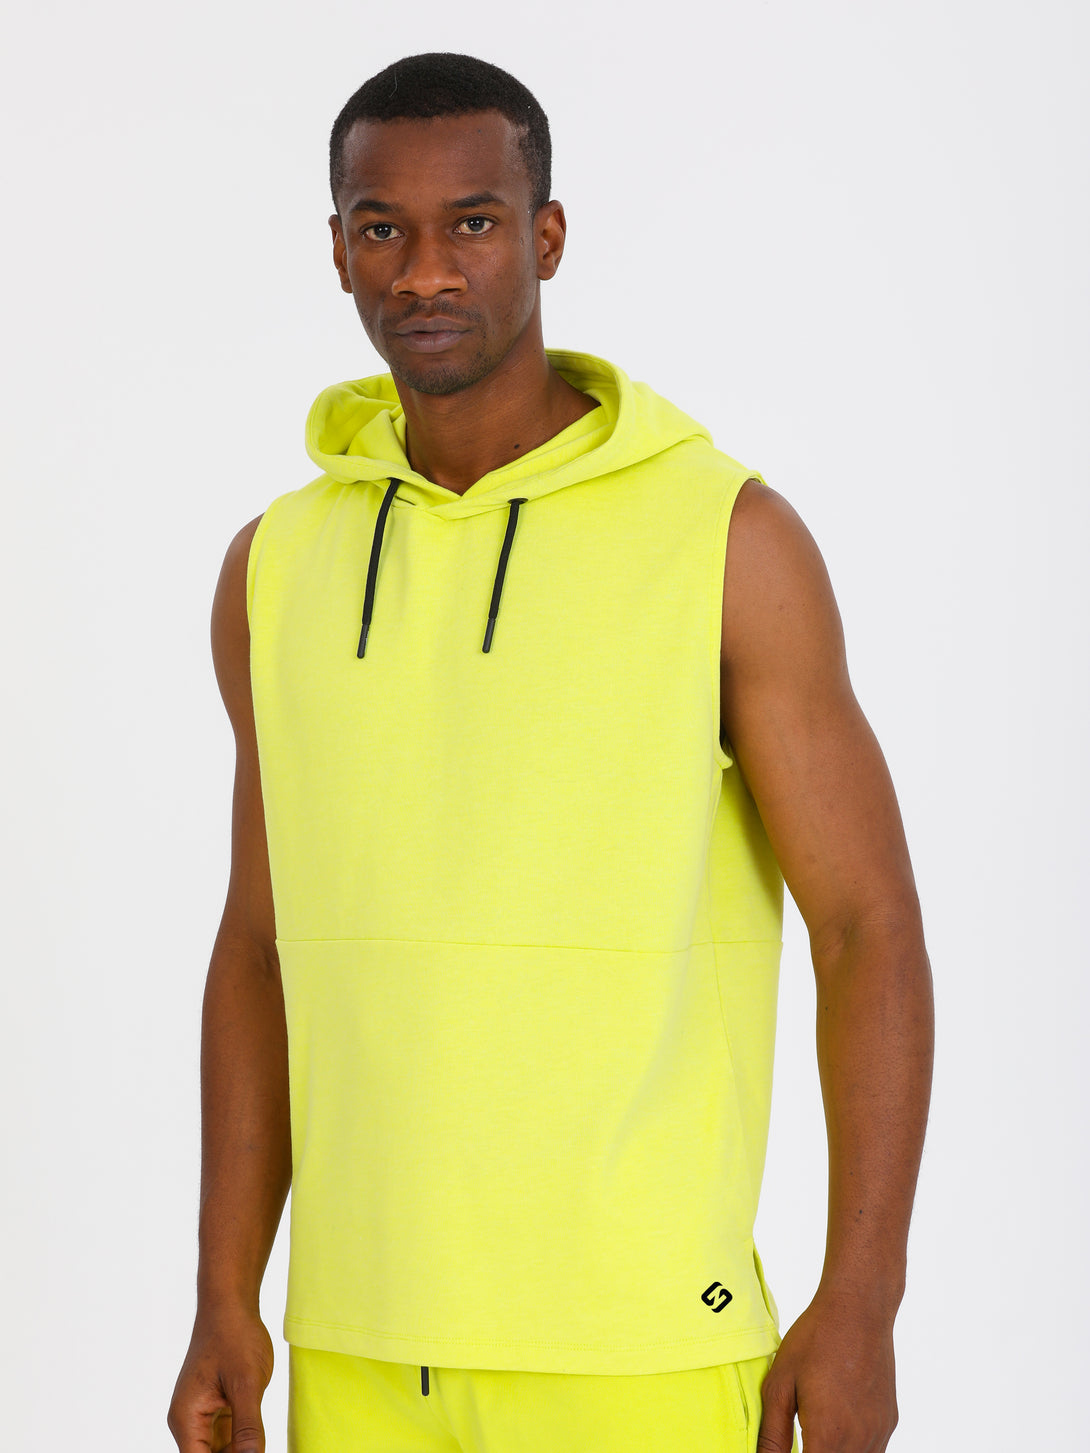 A Men Wearing Lime The Basic Hooded Vest